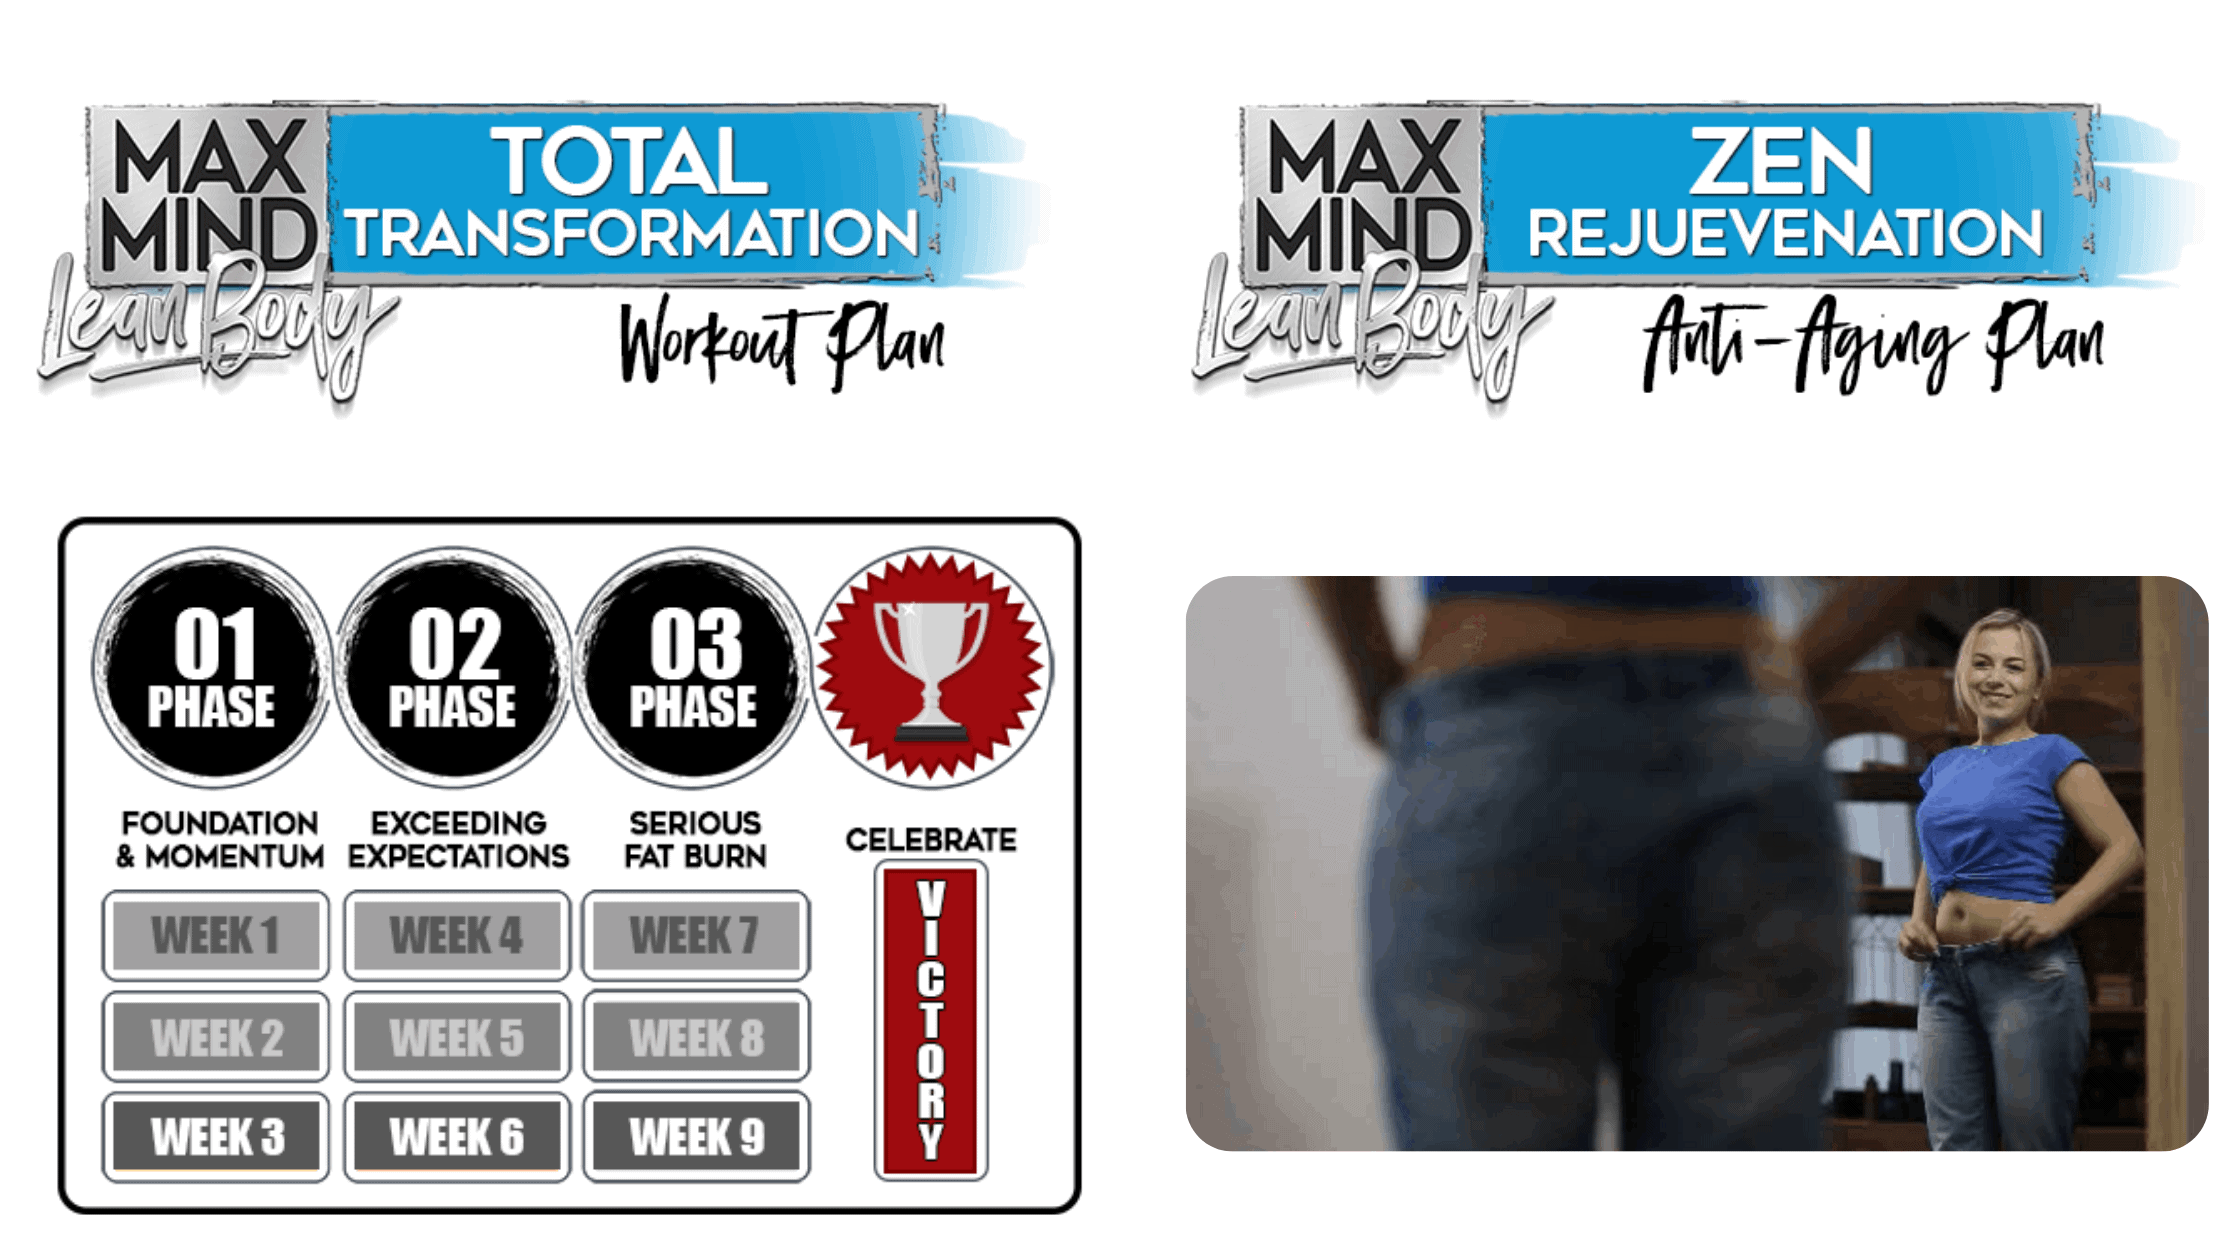 Max Mind Lean Body Program